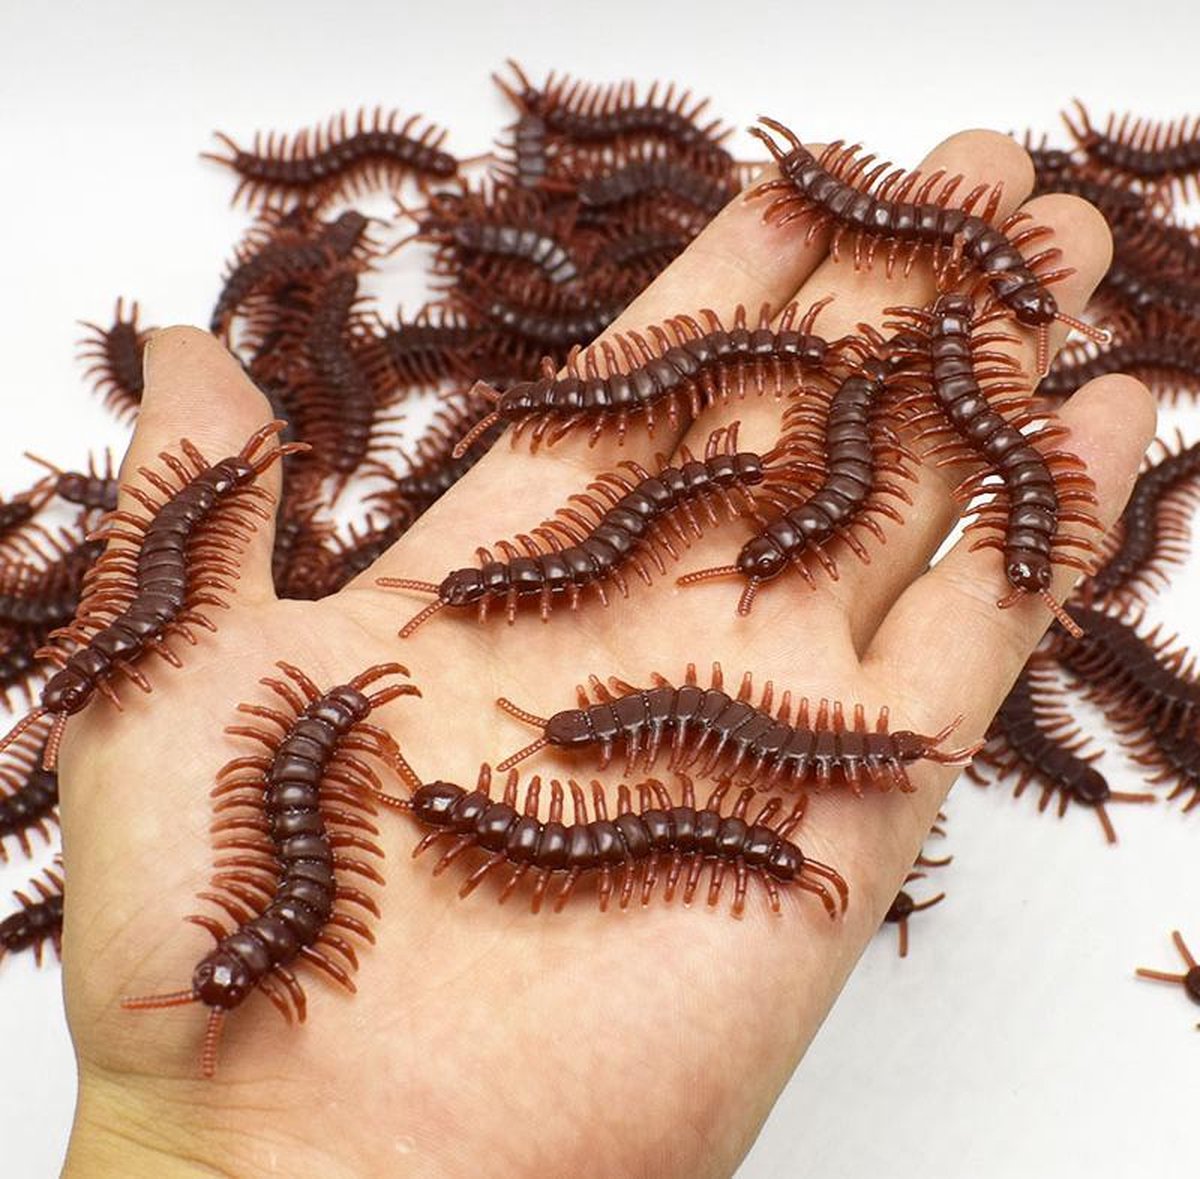 hiërarchie Beneden afronden Ontbering Nep Duizendpoot Set 10 stuks - Insect - Prank - Fake Centipede | bol.com